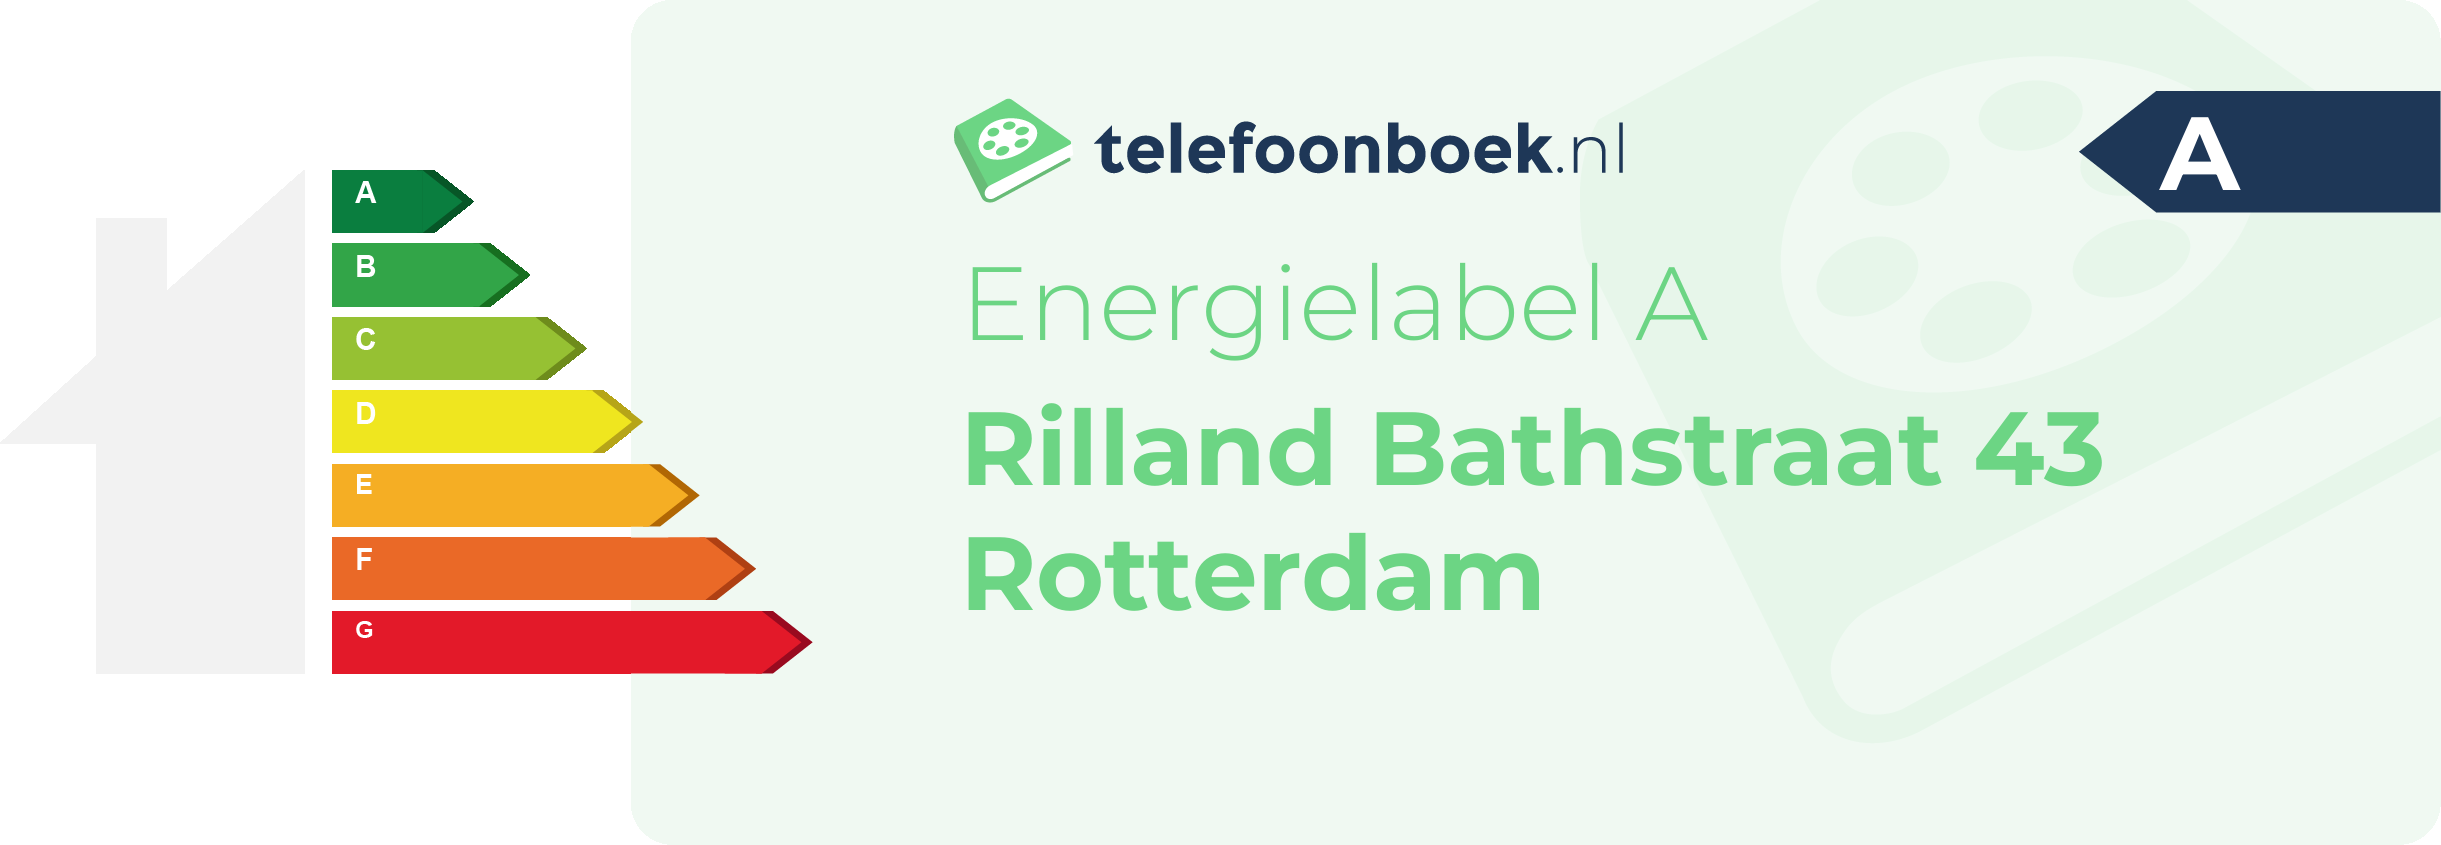 Energielabel Rilland Bathstraat 43 Rotterdam